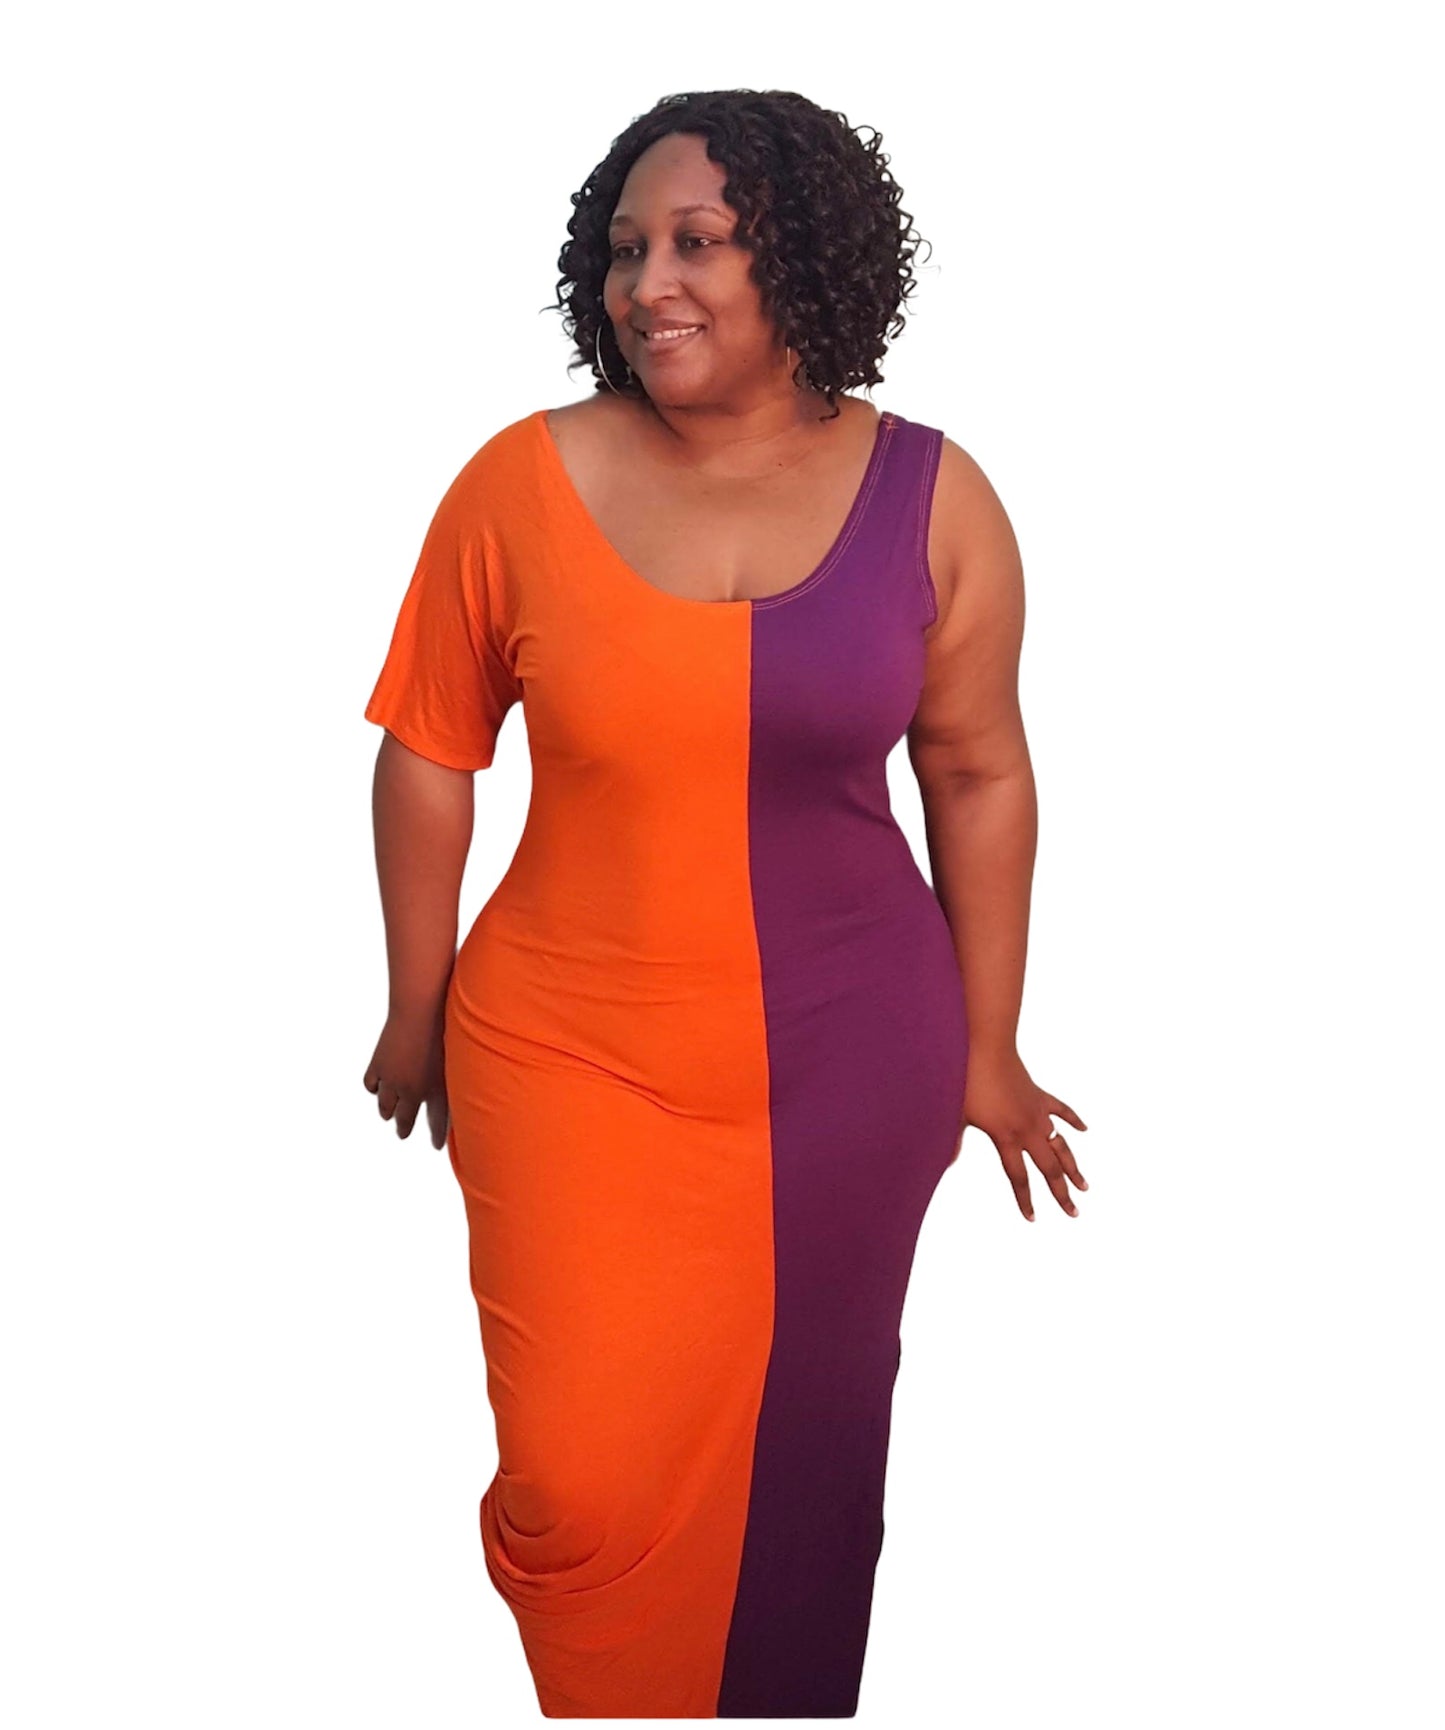 Best Maxi Dress - Orange and Purple Plus Size